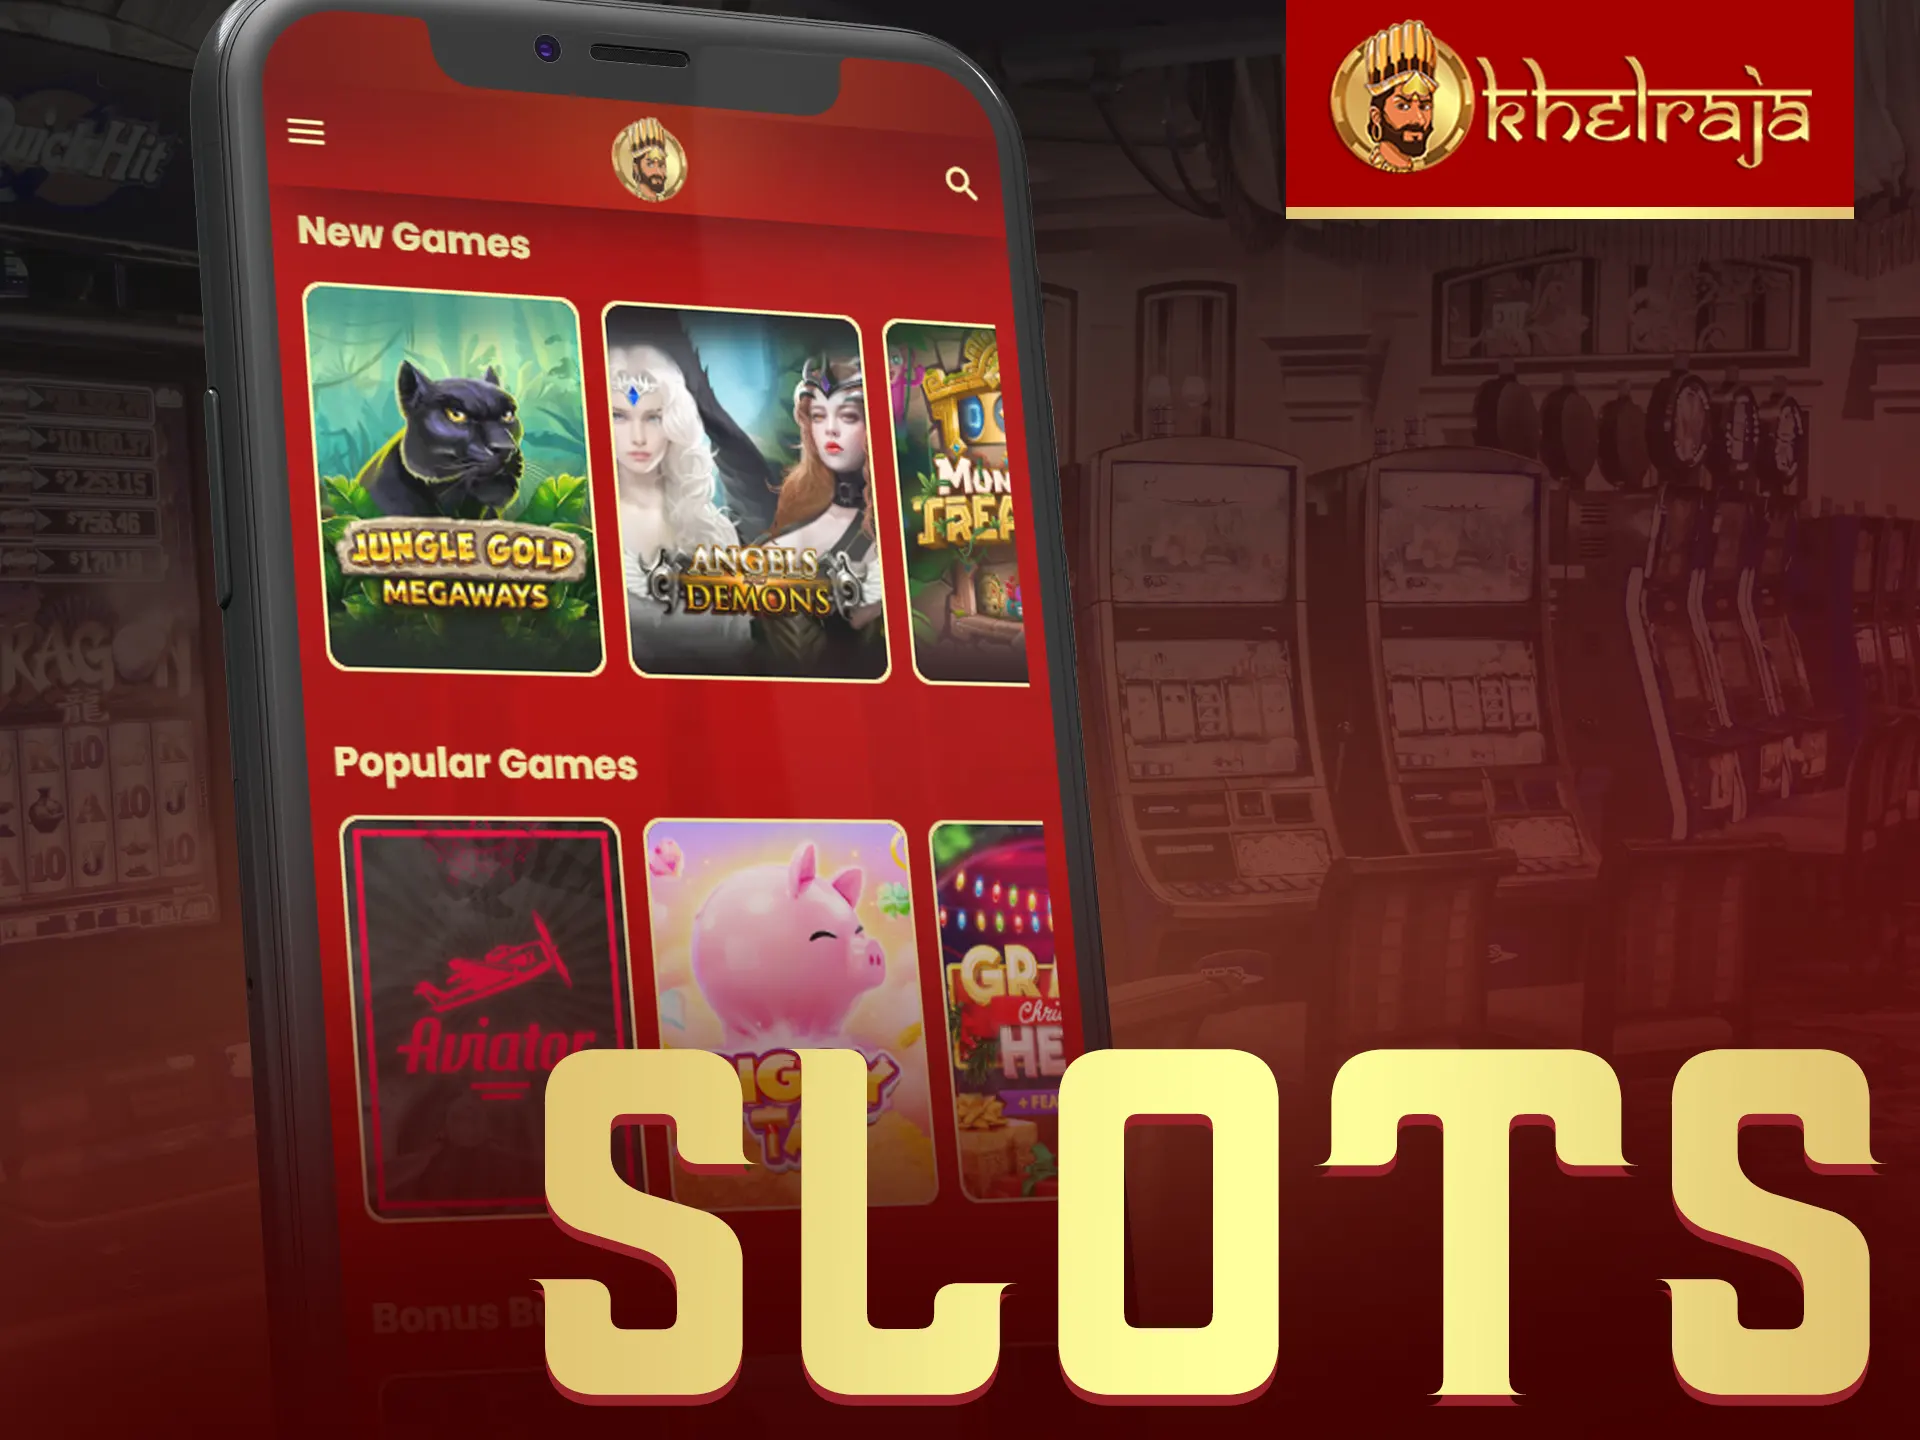 Khelraja's app has exciting slot machines.